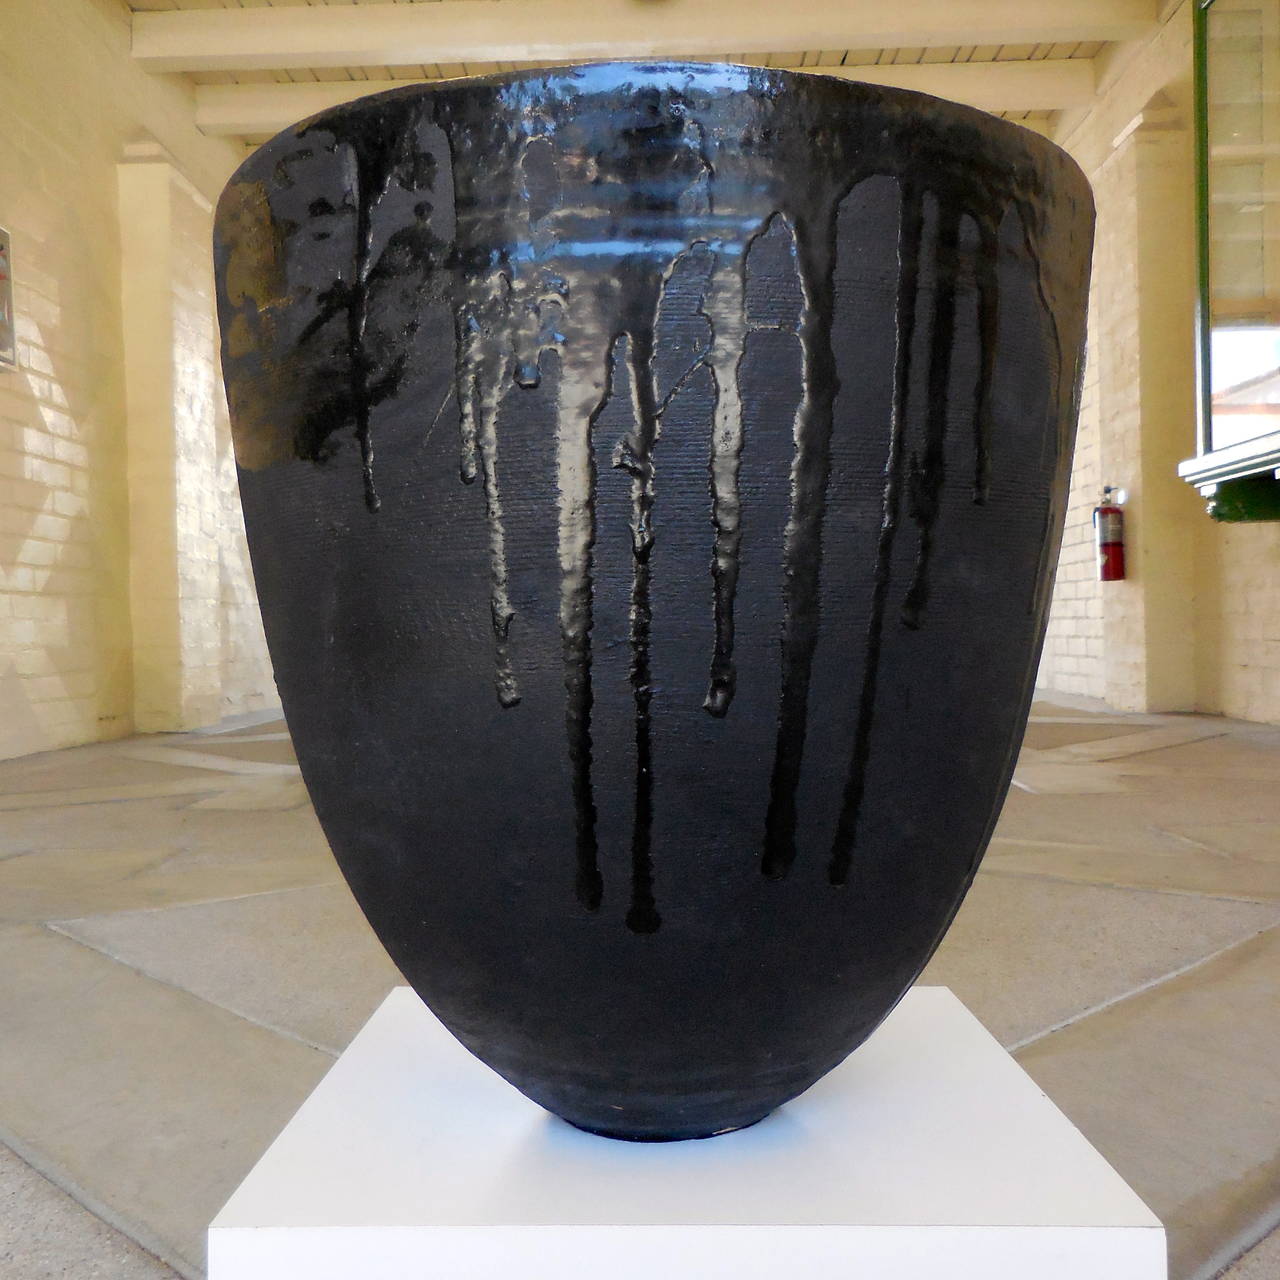 American Pitch Black Contemporary Glazed Stoneware Vessel by Darcy Badiali, circa 2015